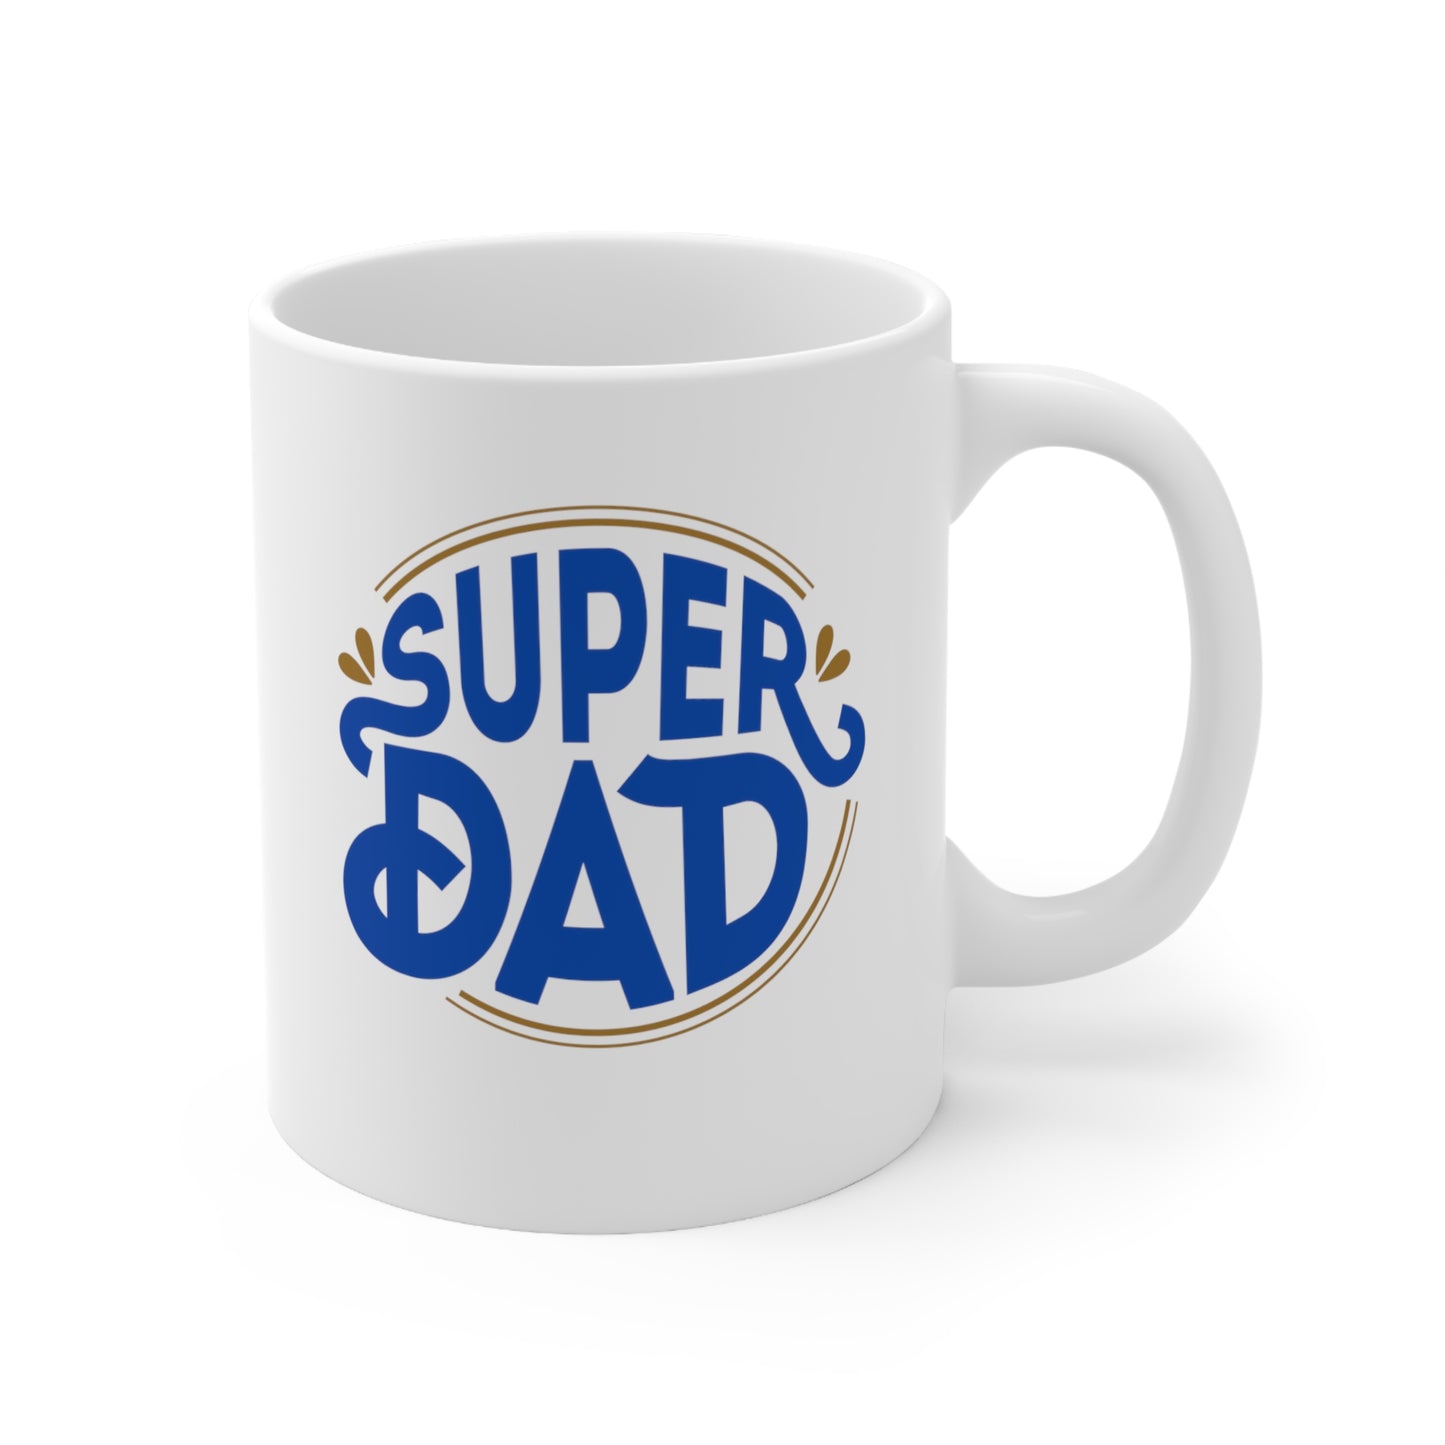 Super Dad Coffee Mug - Best Birthday & Father's Day Gift